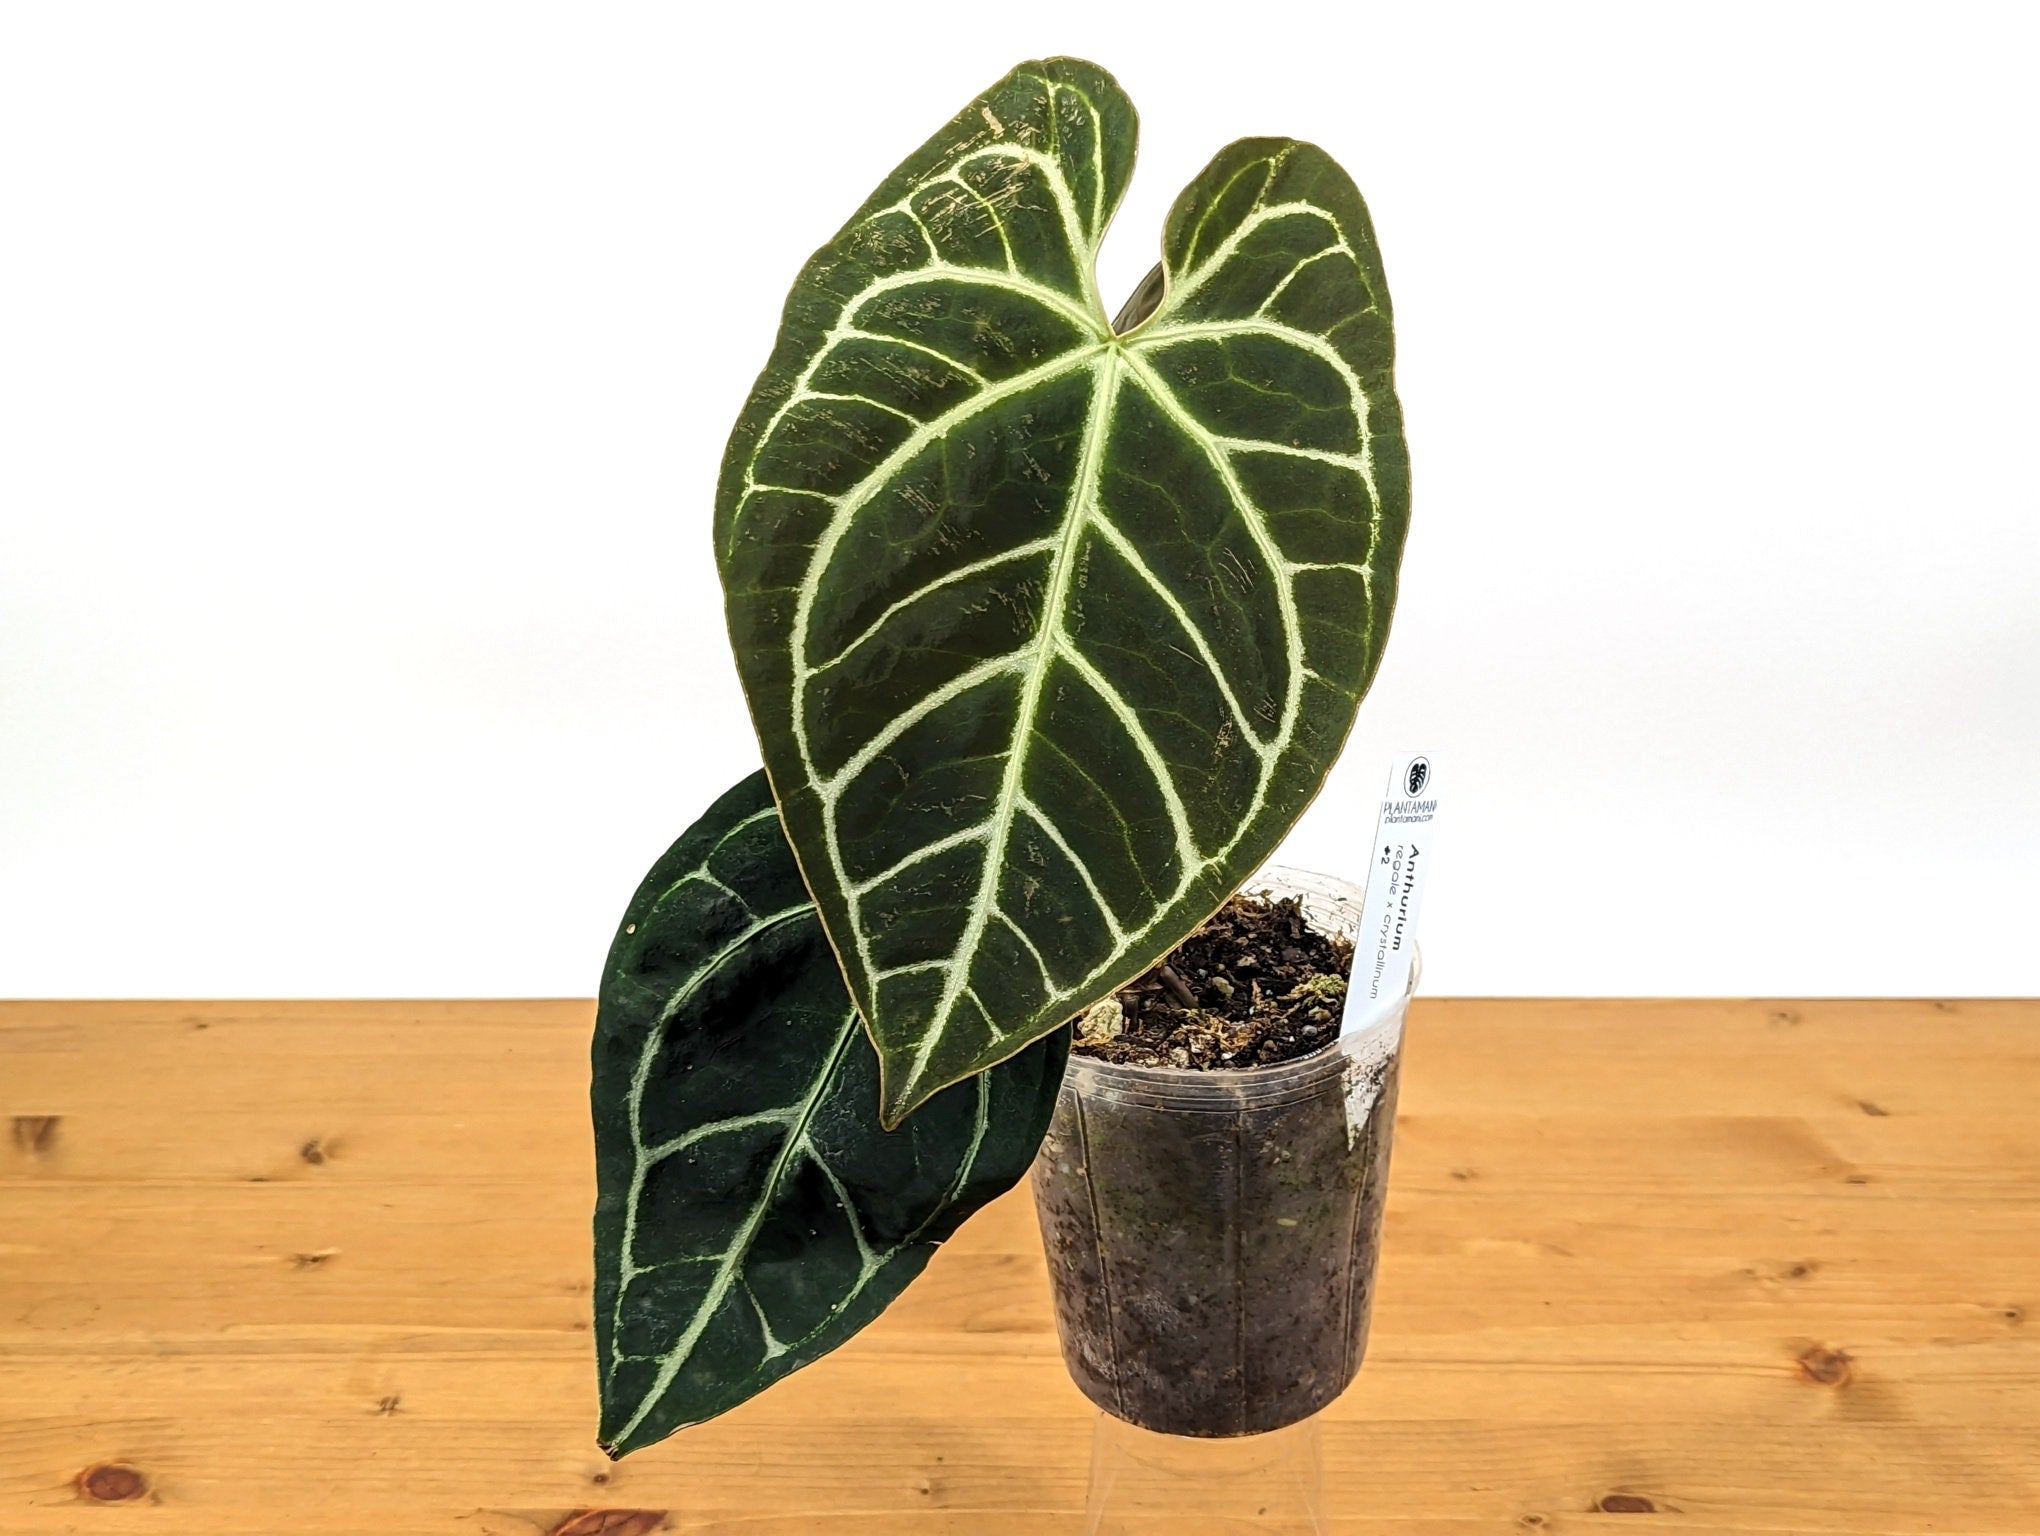 Anthurium Regale x Crystallinum - Exact Plant 4 inch pot